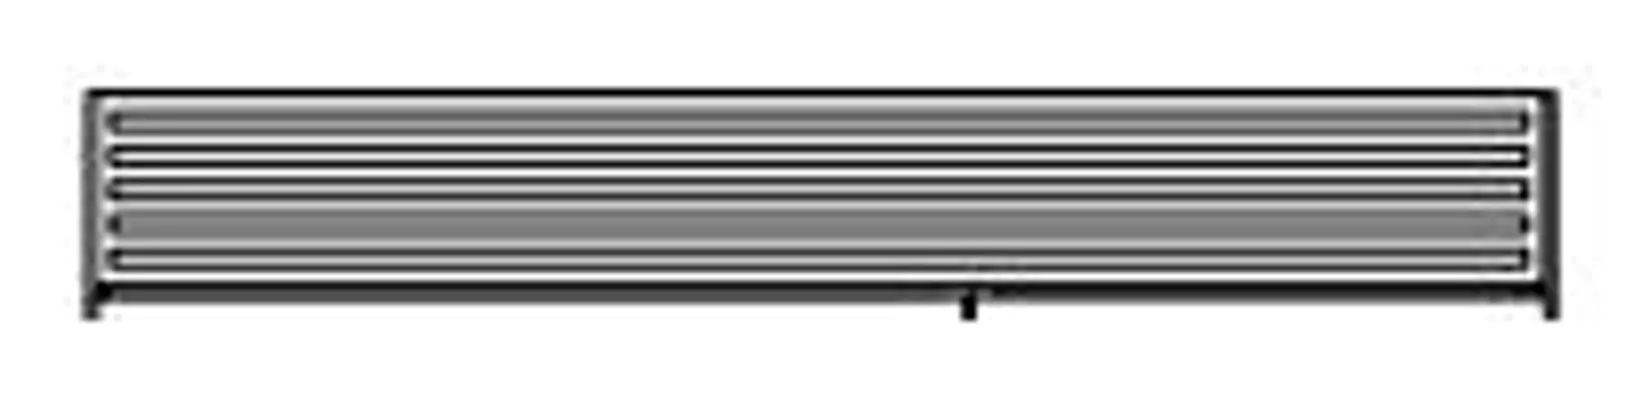 XPRO195TOP-Fhiaba-Koel-vries-accessoires